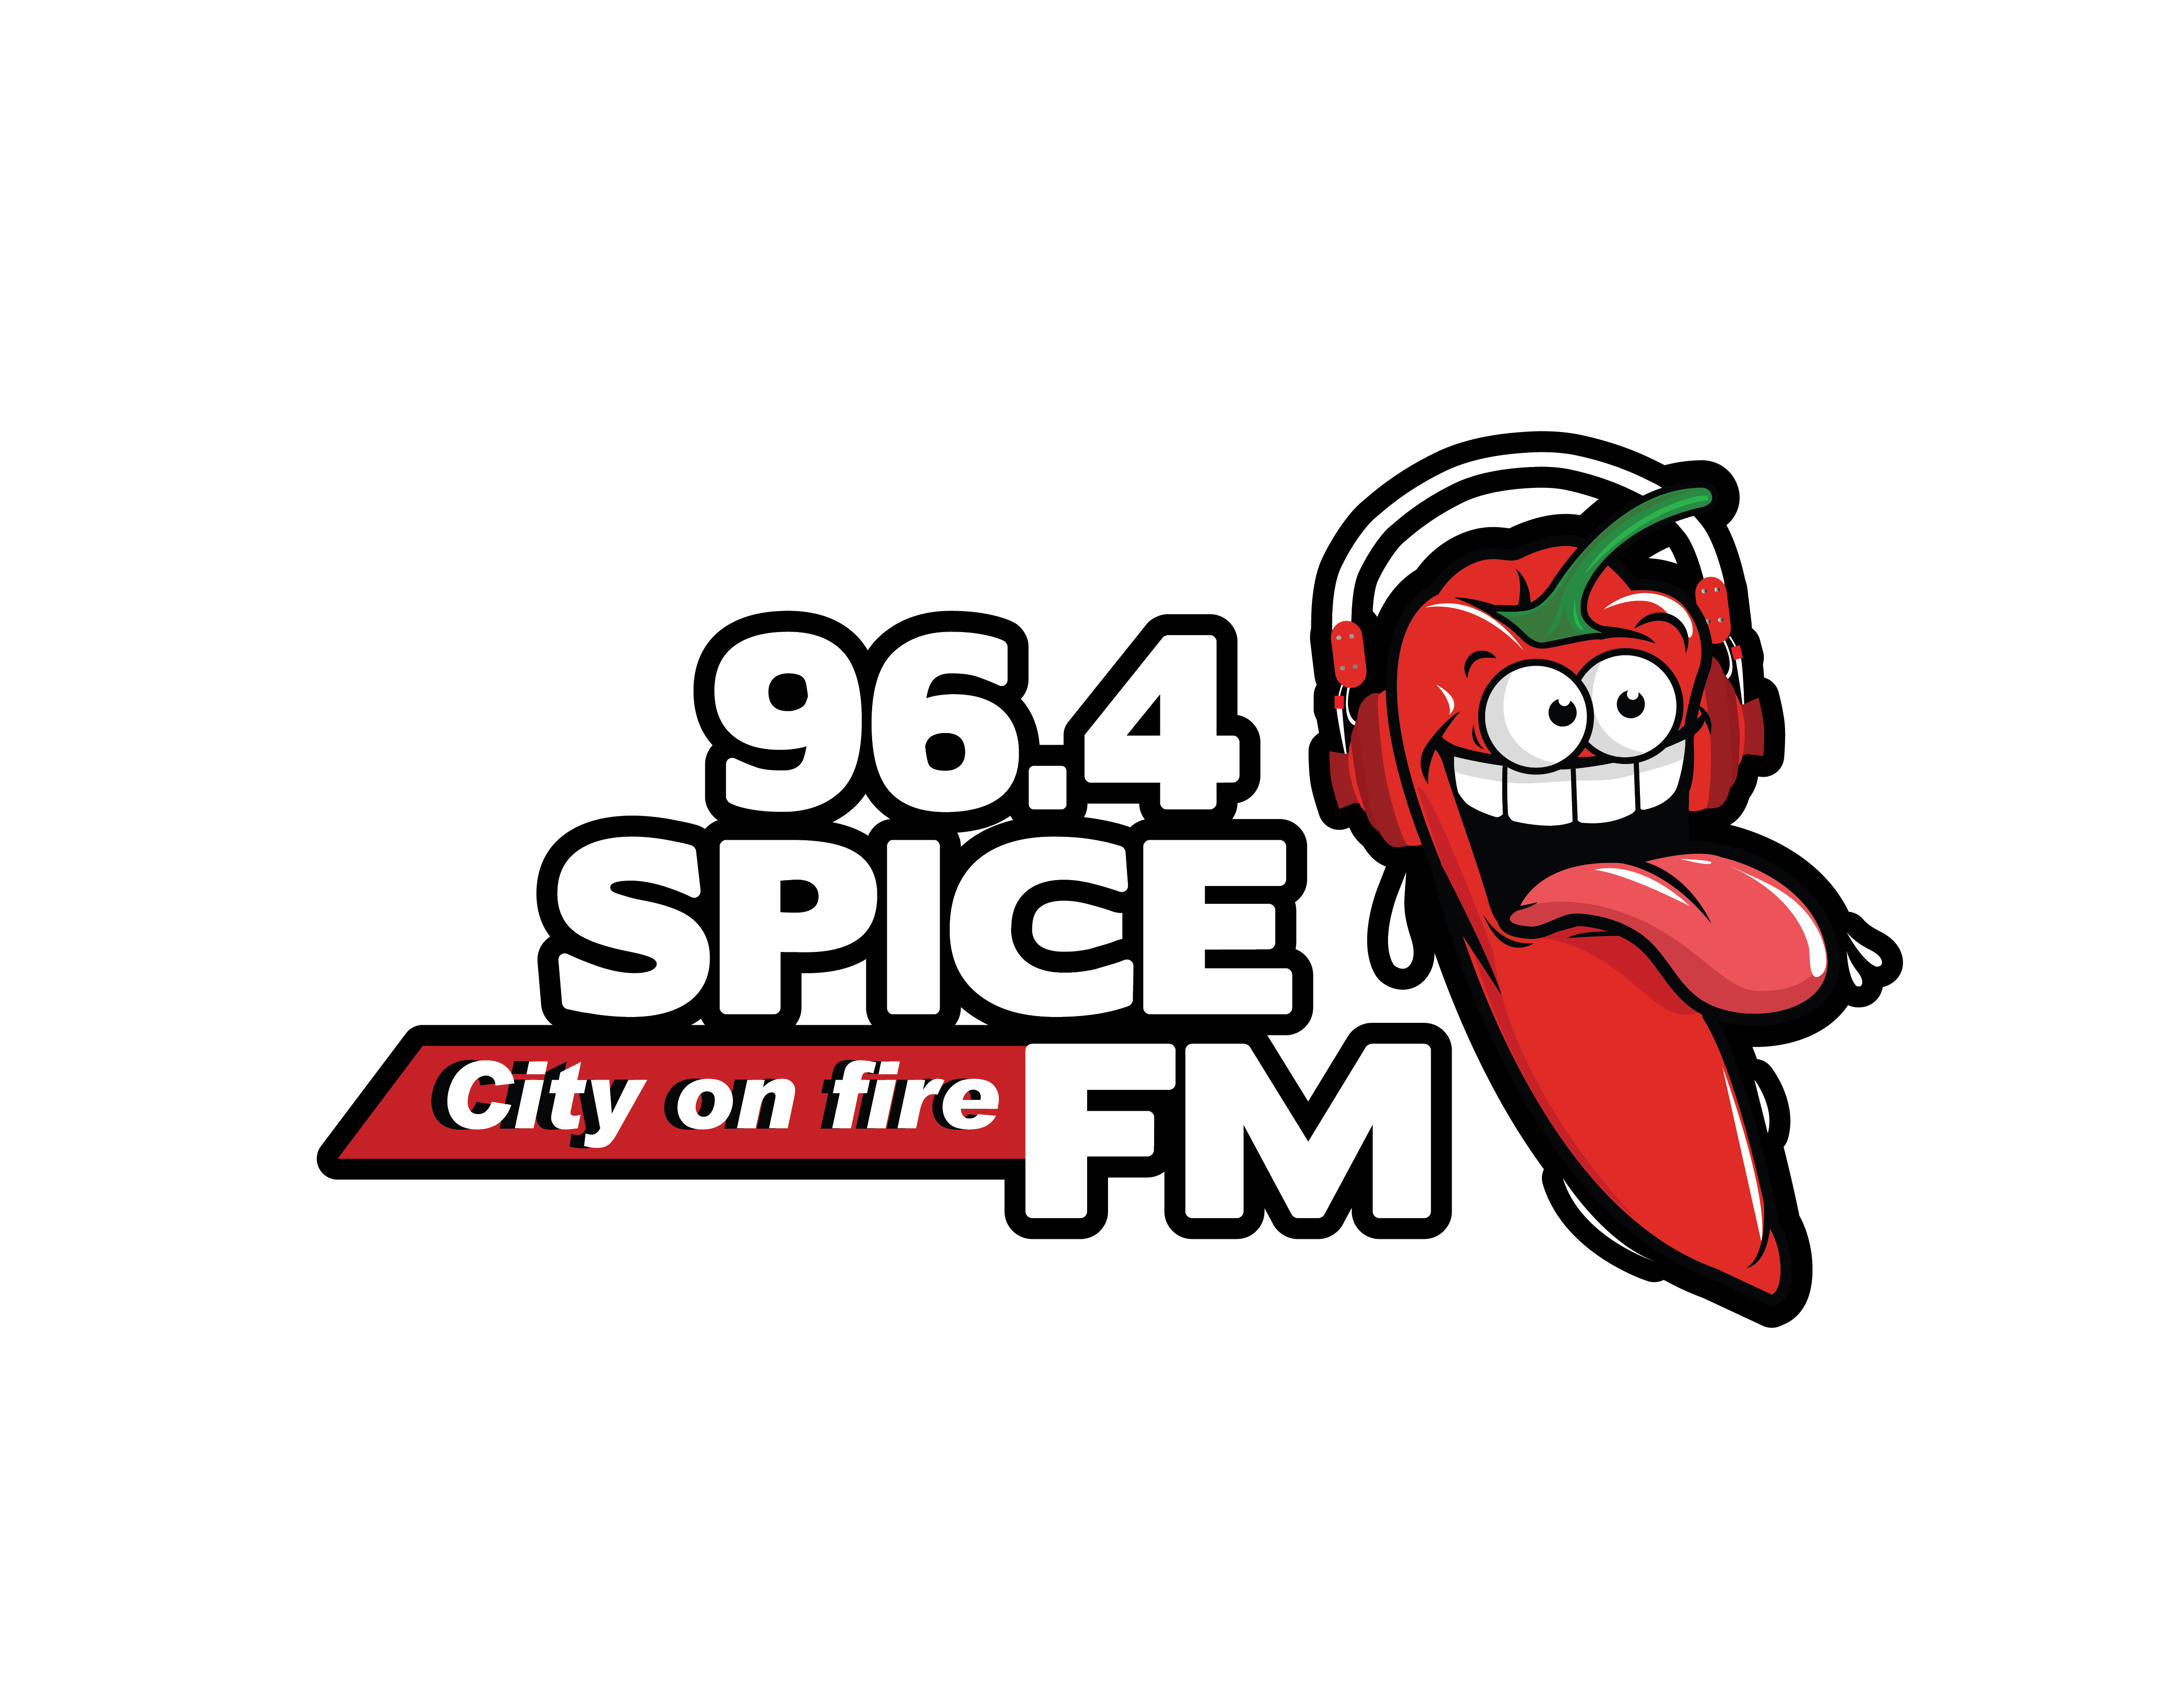 96.4 Spice FM